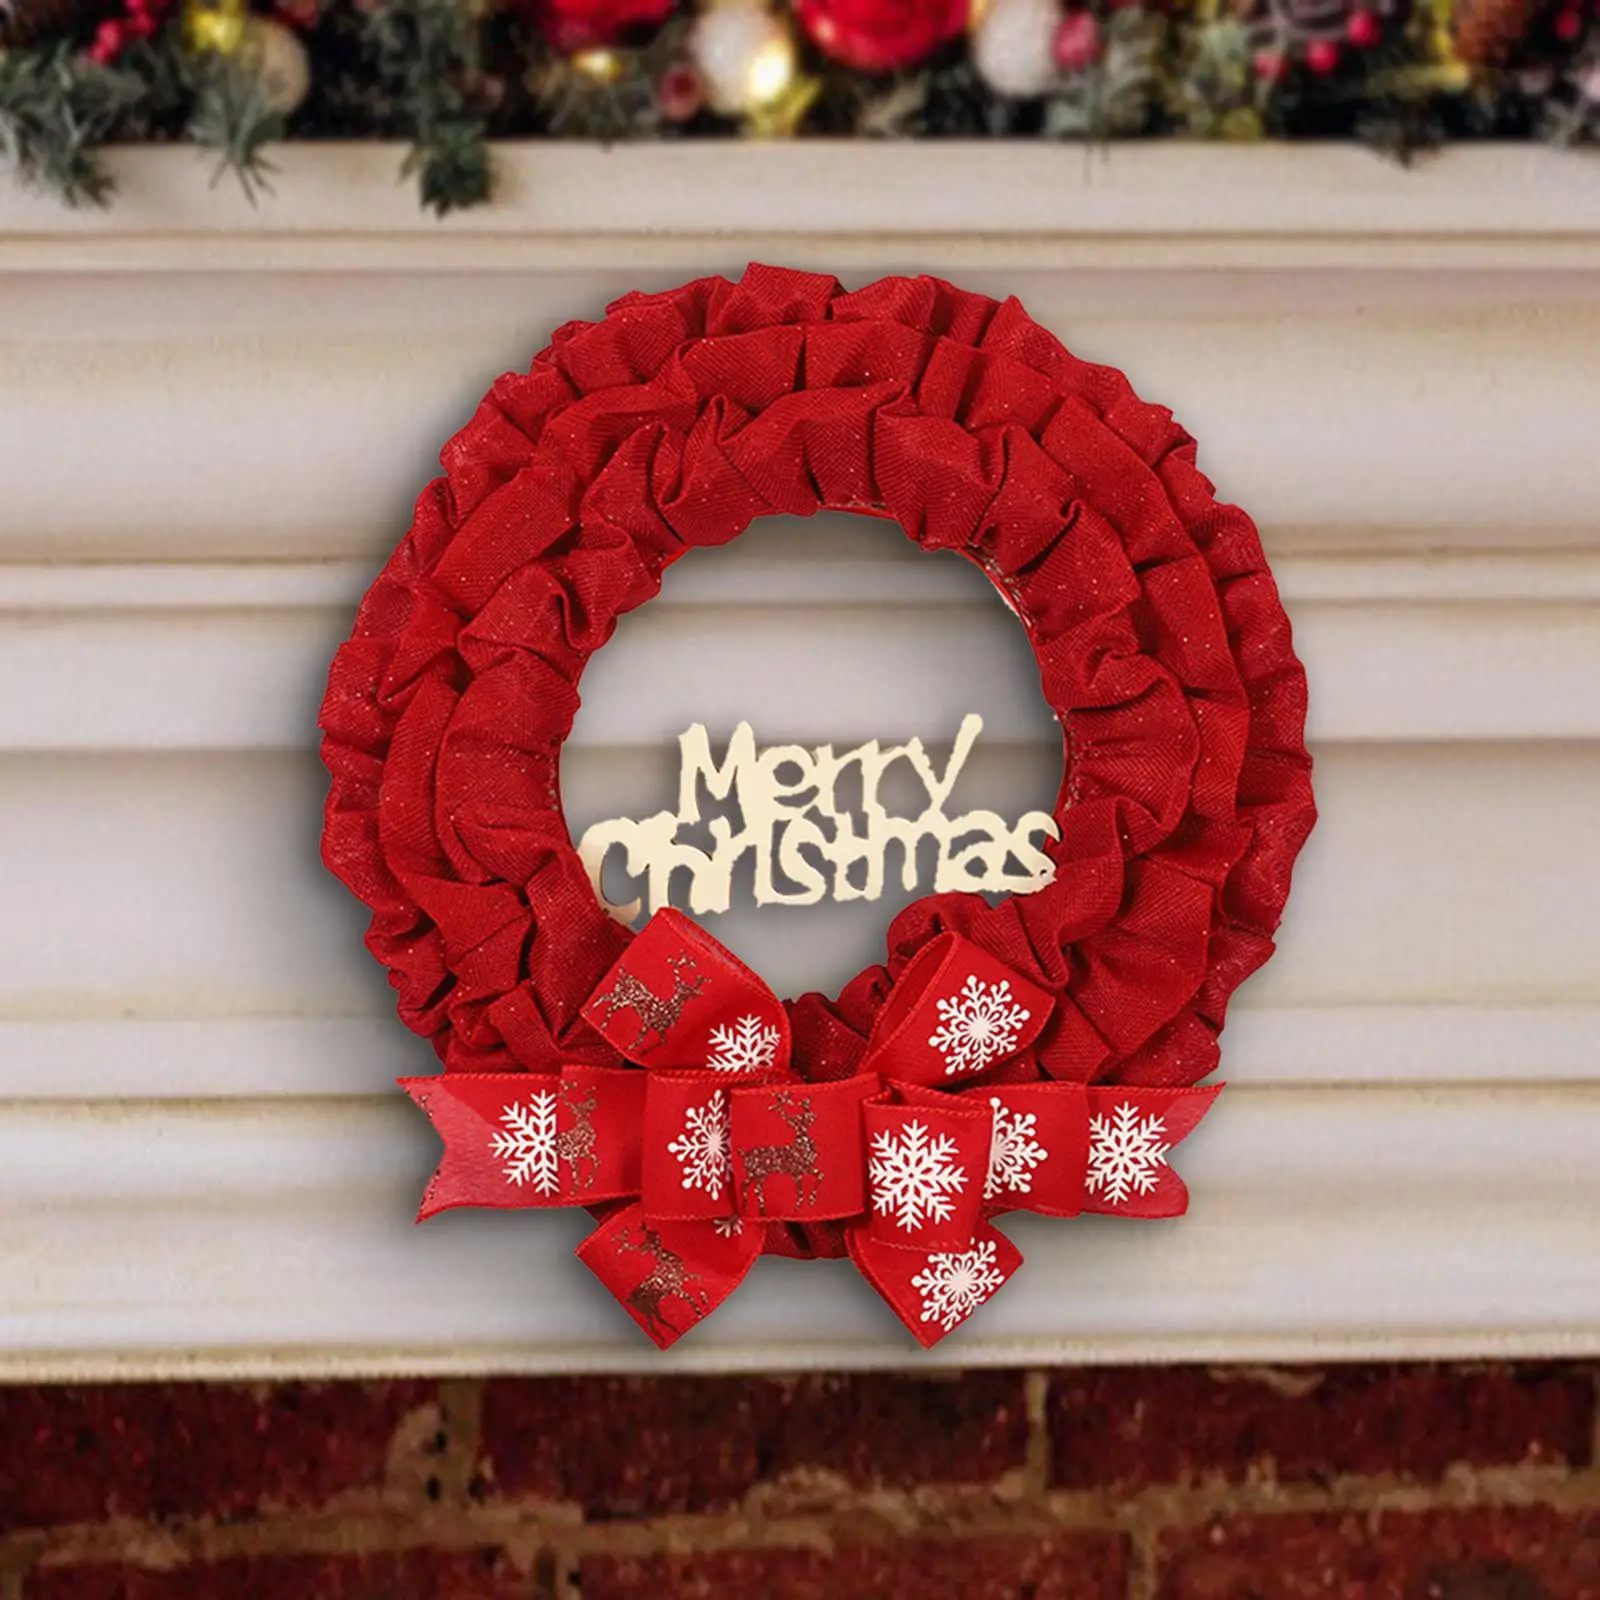 Christmas Wreath Decorative Ornaments Garland Hanging Door Wreaths for Xmas Front Yard Holiday Farmhouse Window